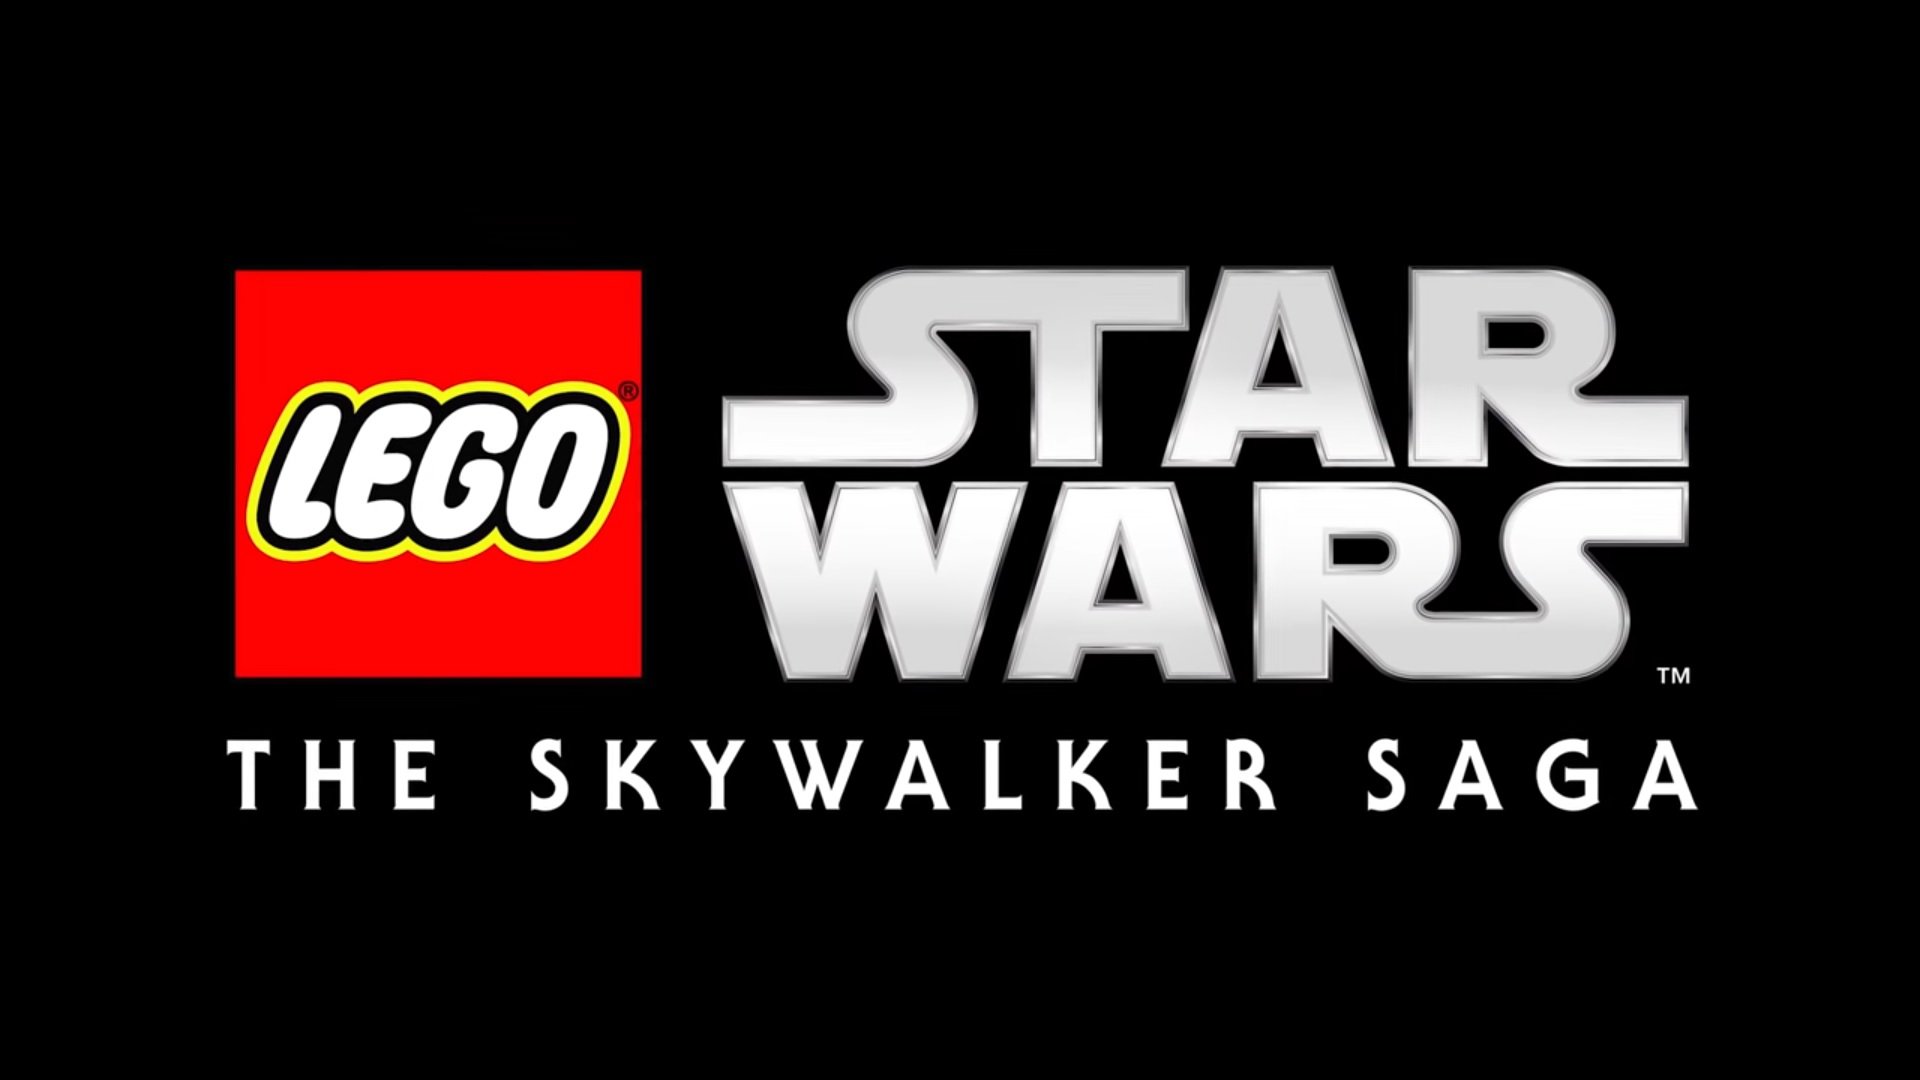 LEGO Star Wars The Skywalker Saga finally gets a release date